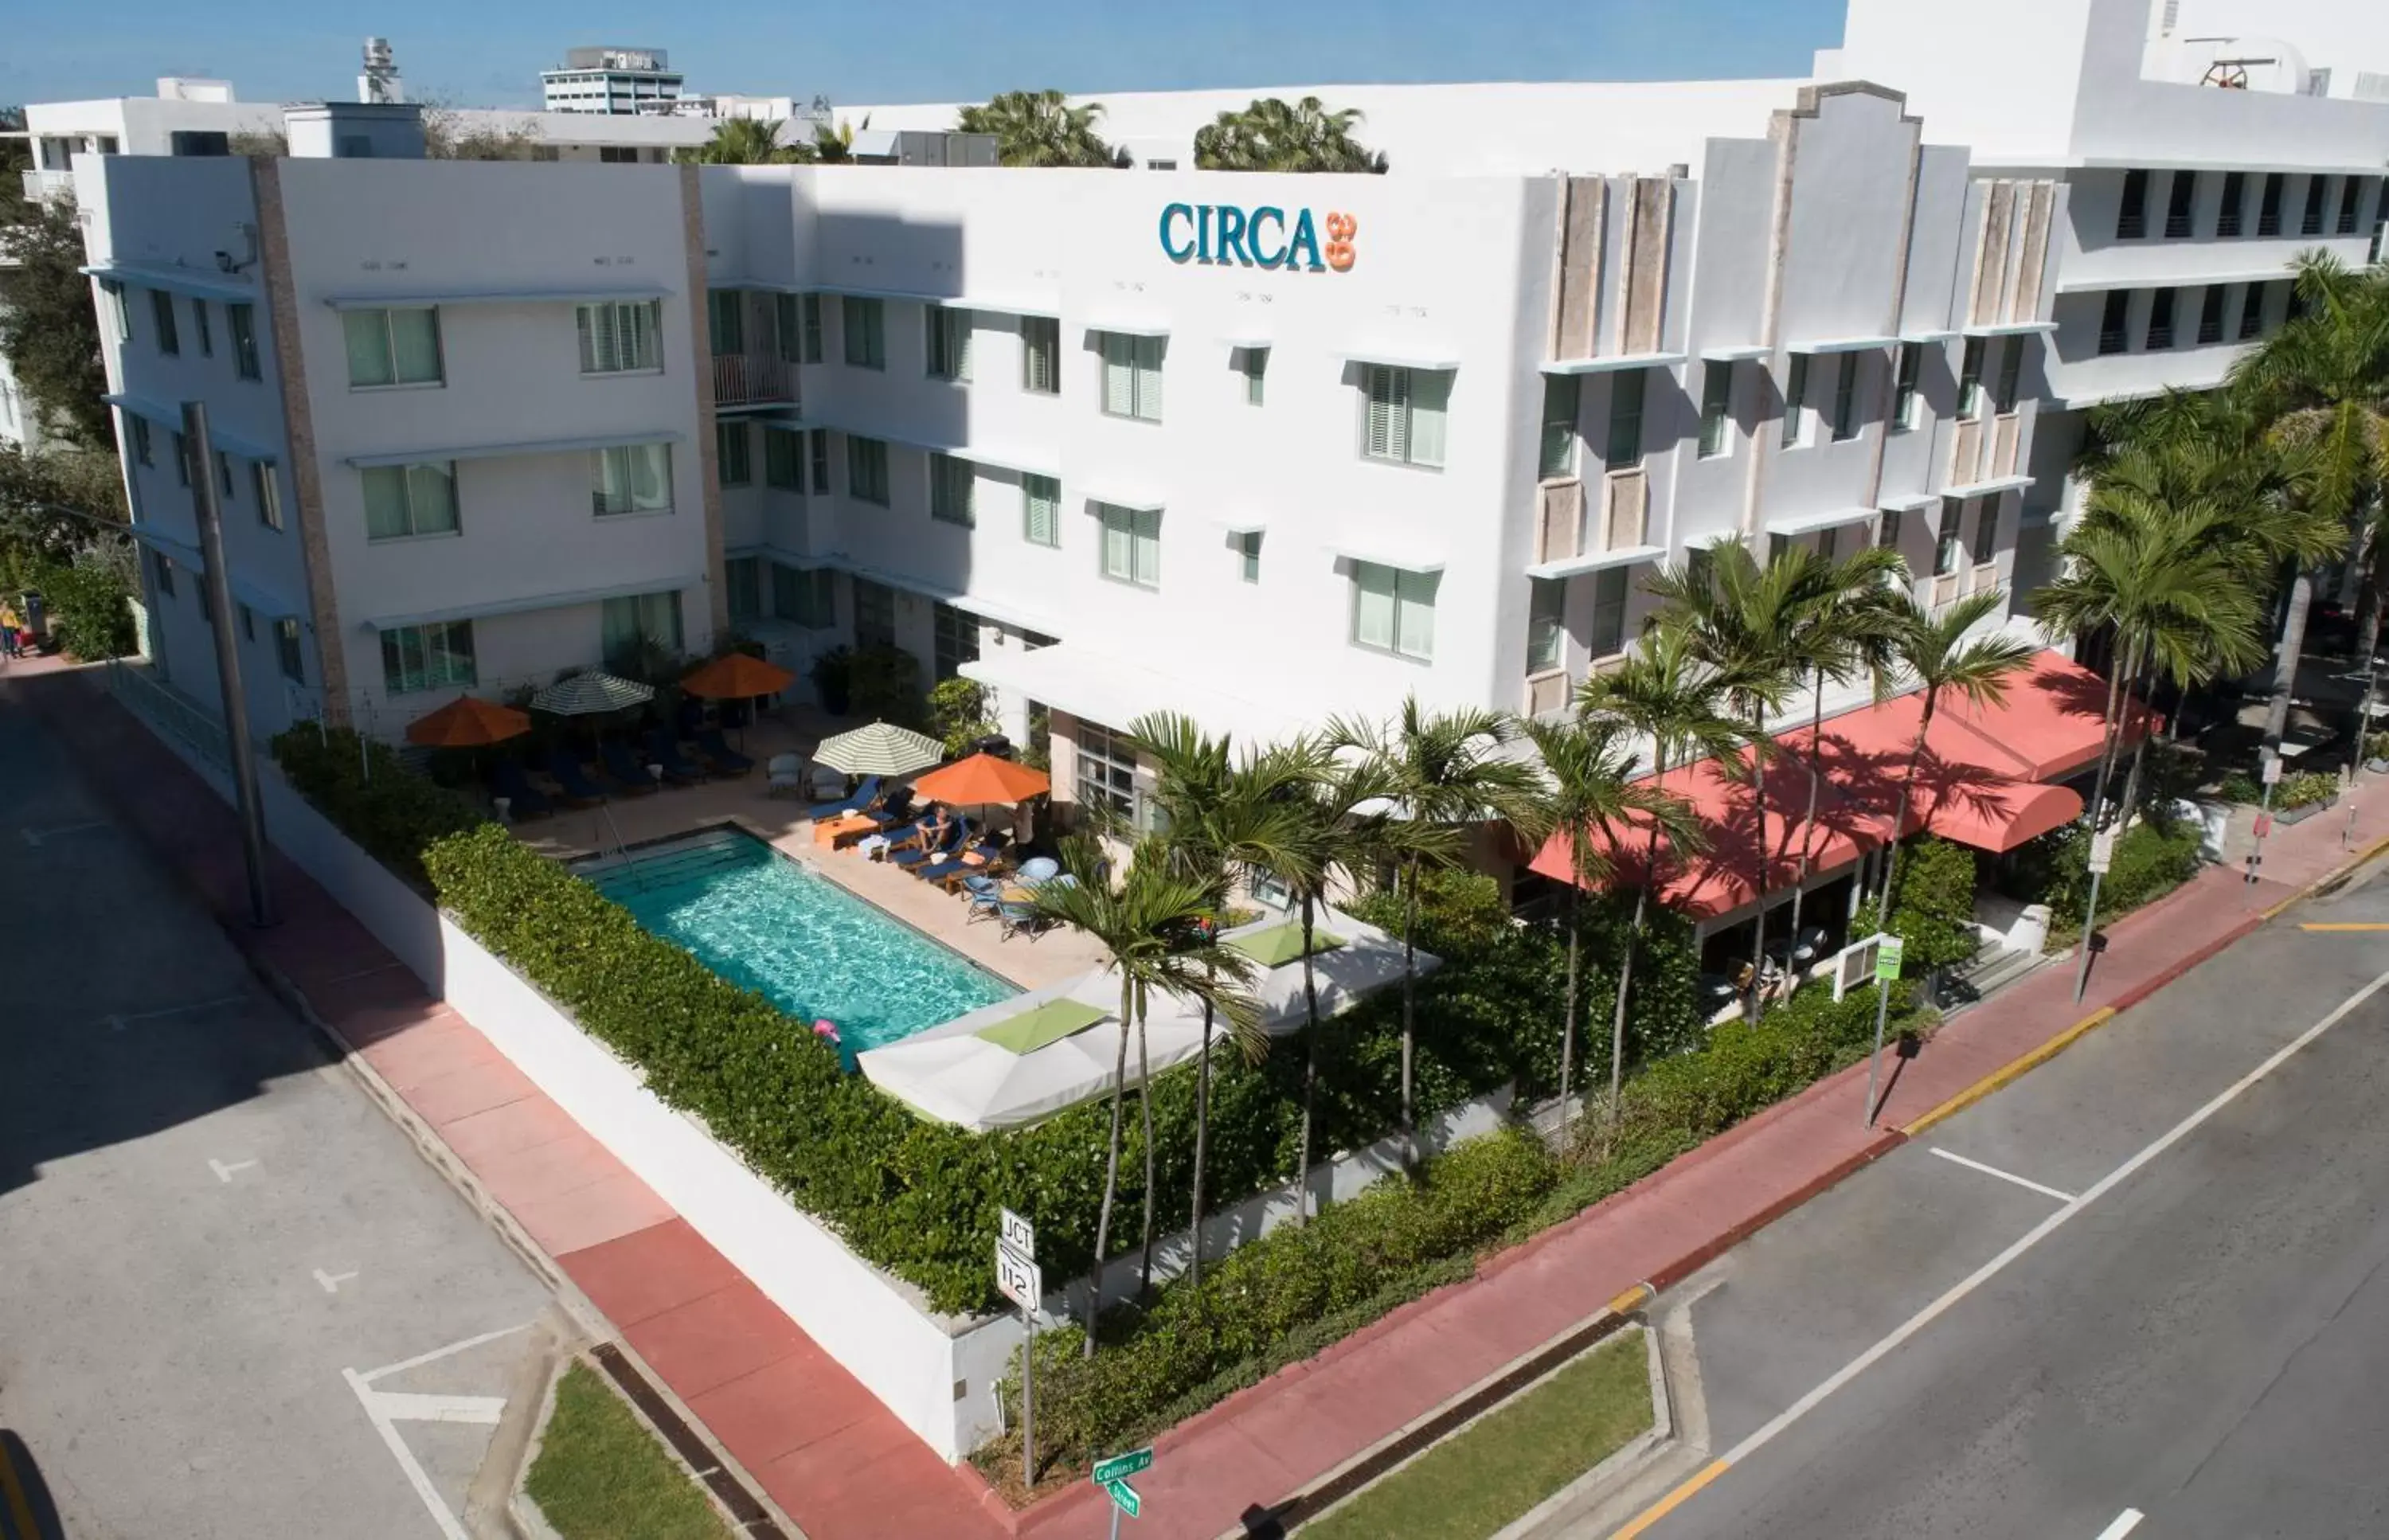 Property building, Pool View in Circa 39 Hotel Miami Beach